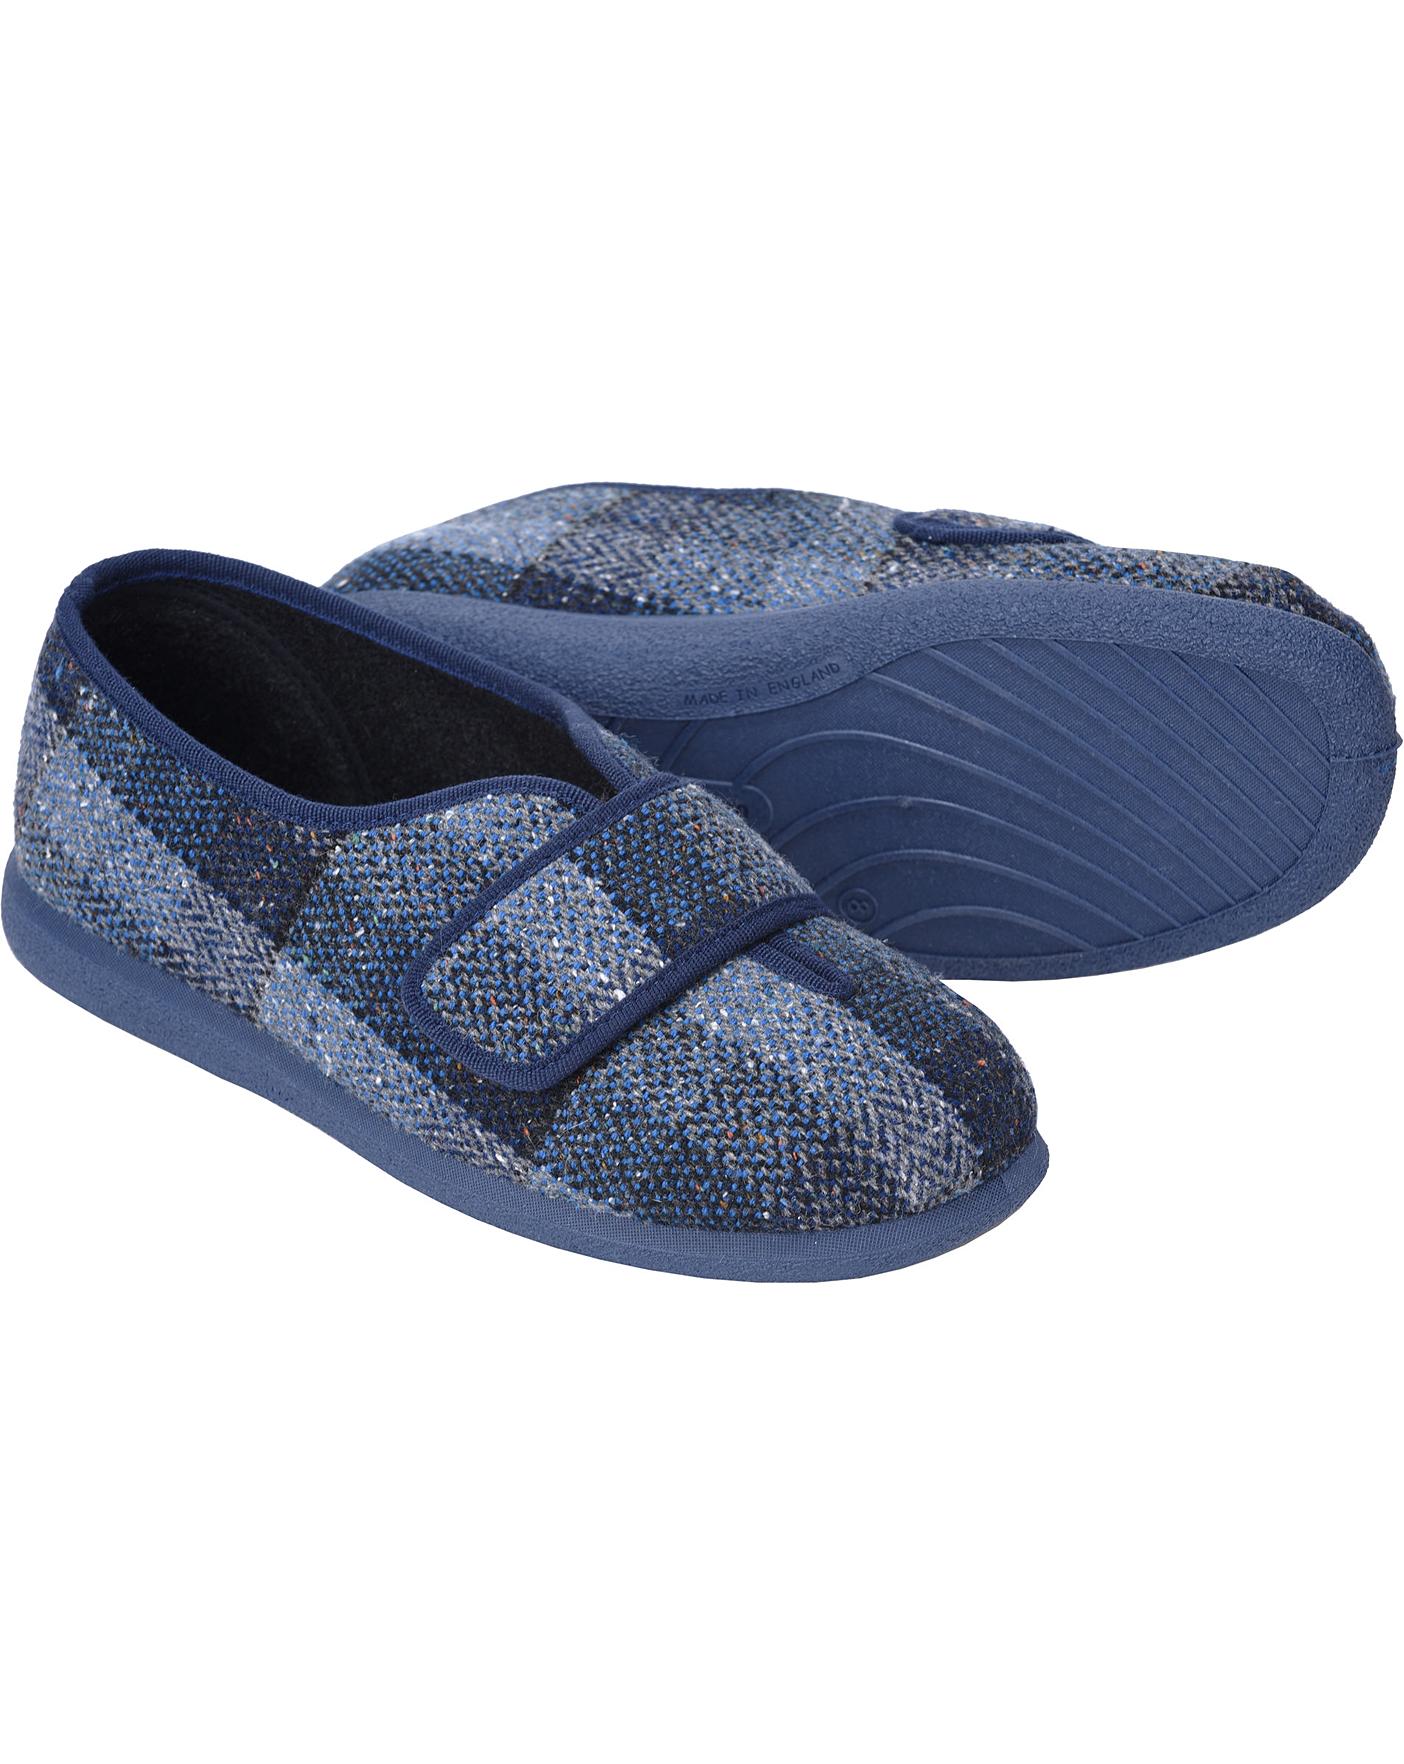 xxw mens slippers